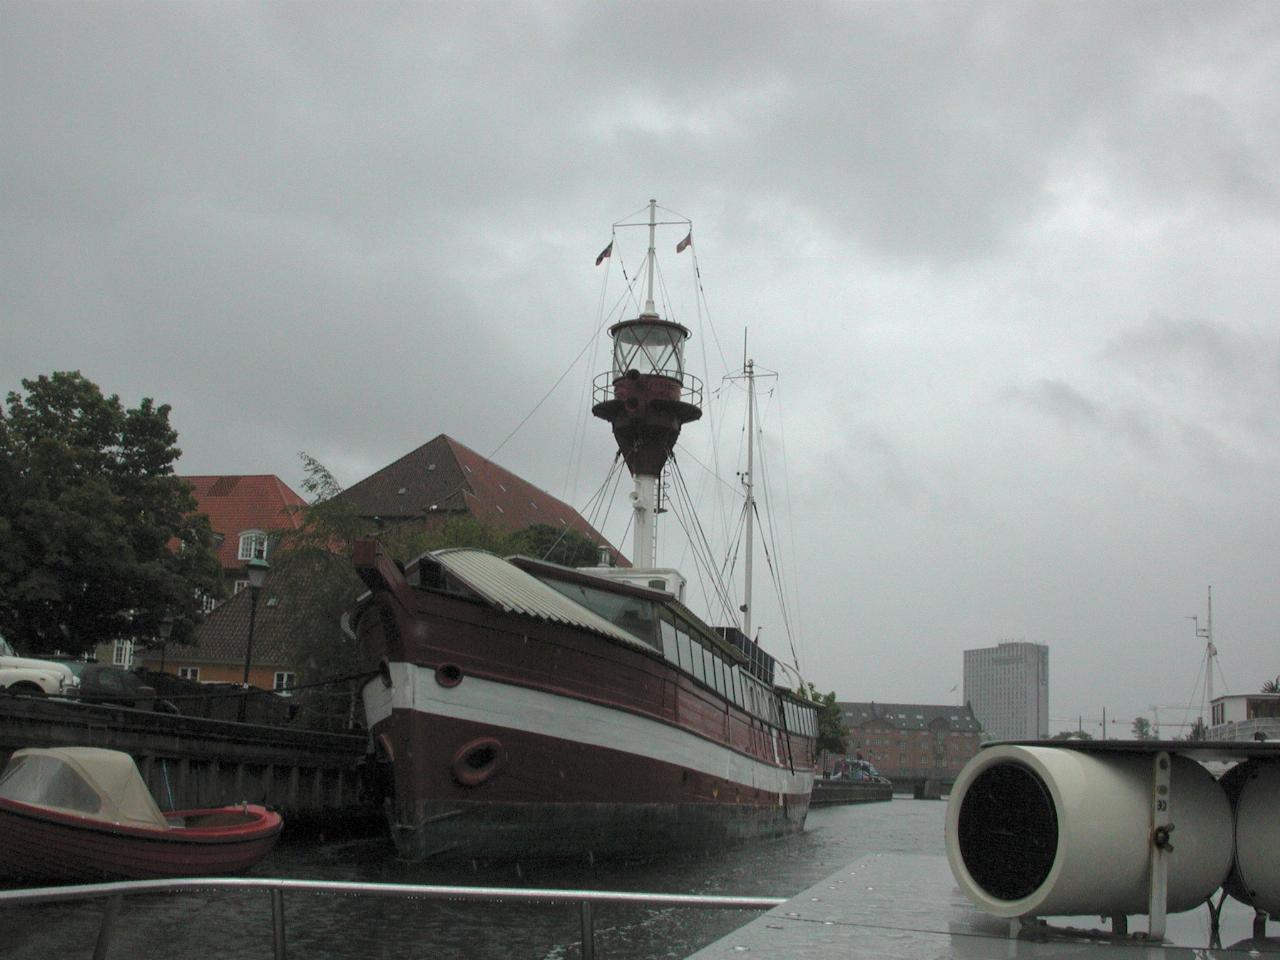 KPLU Viking Jazz: Former lighter turned house boat on Christianhaven Canal